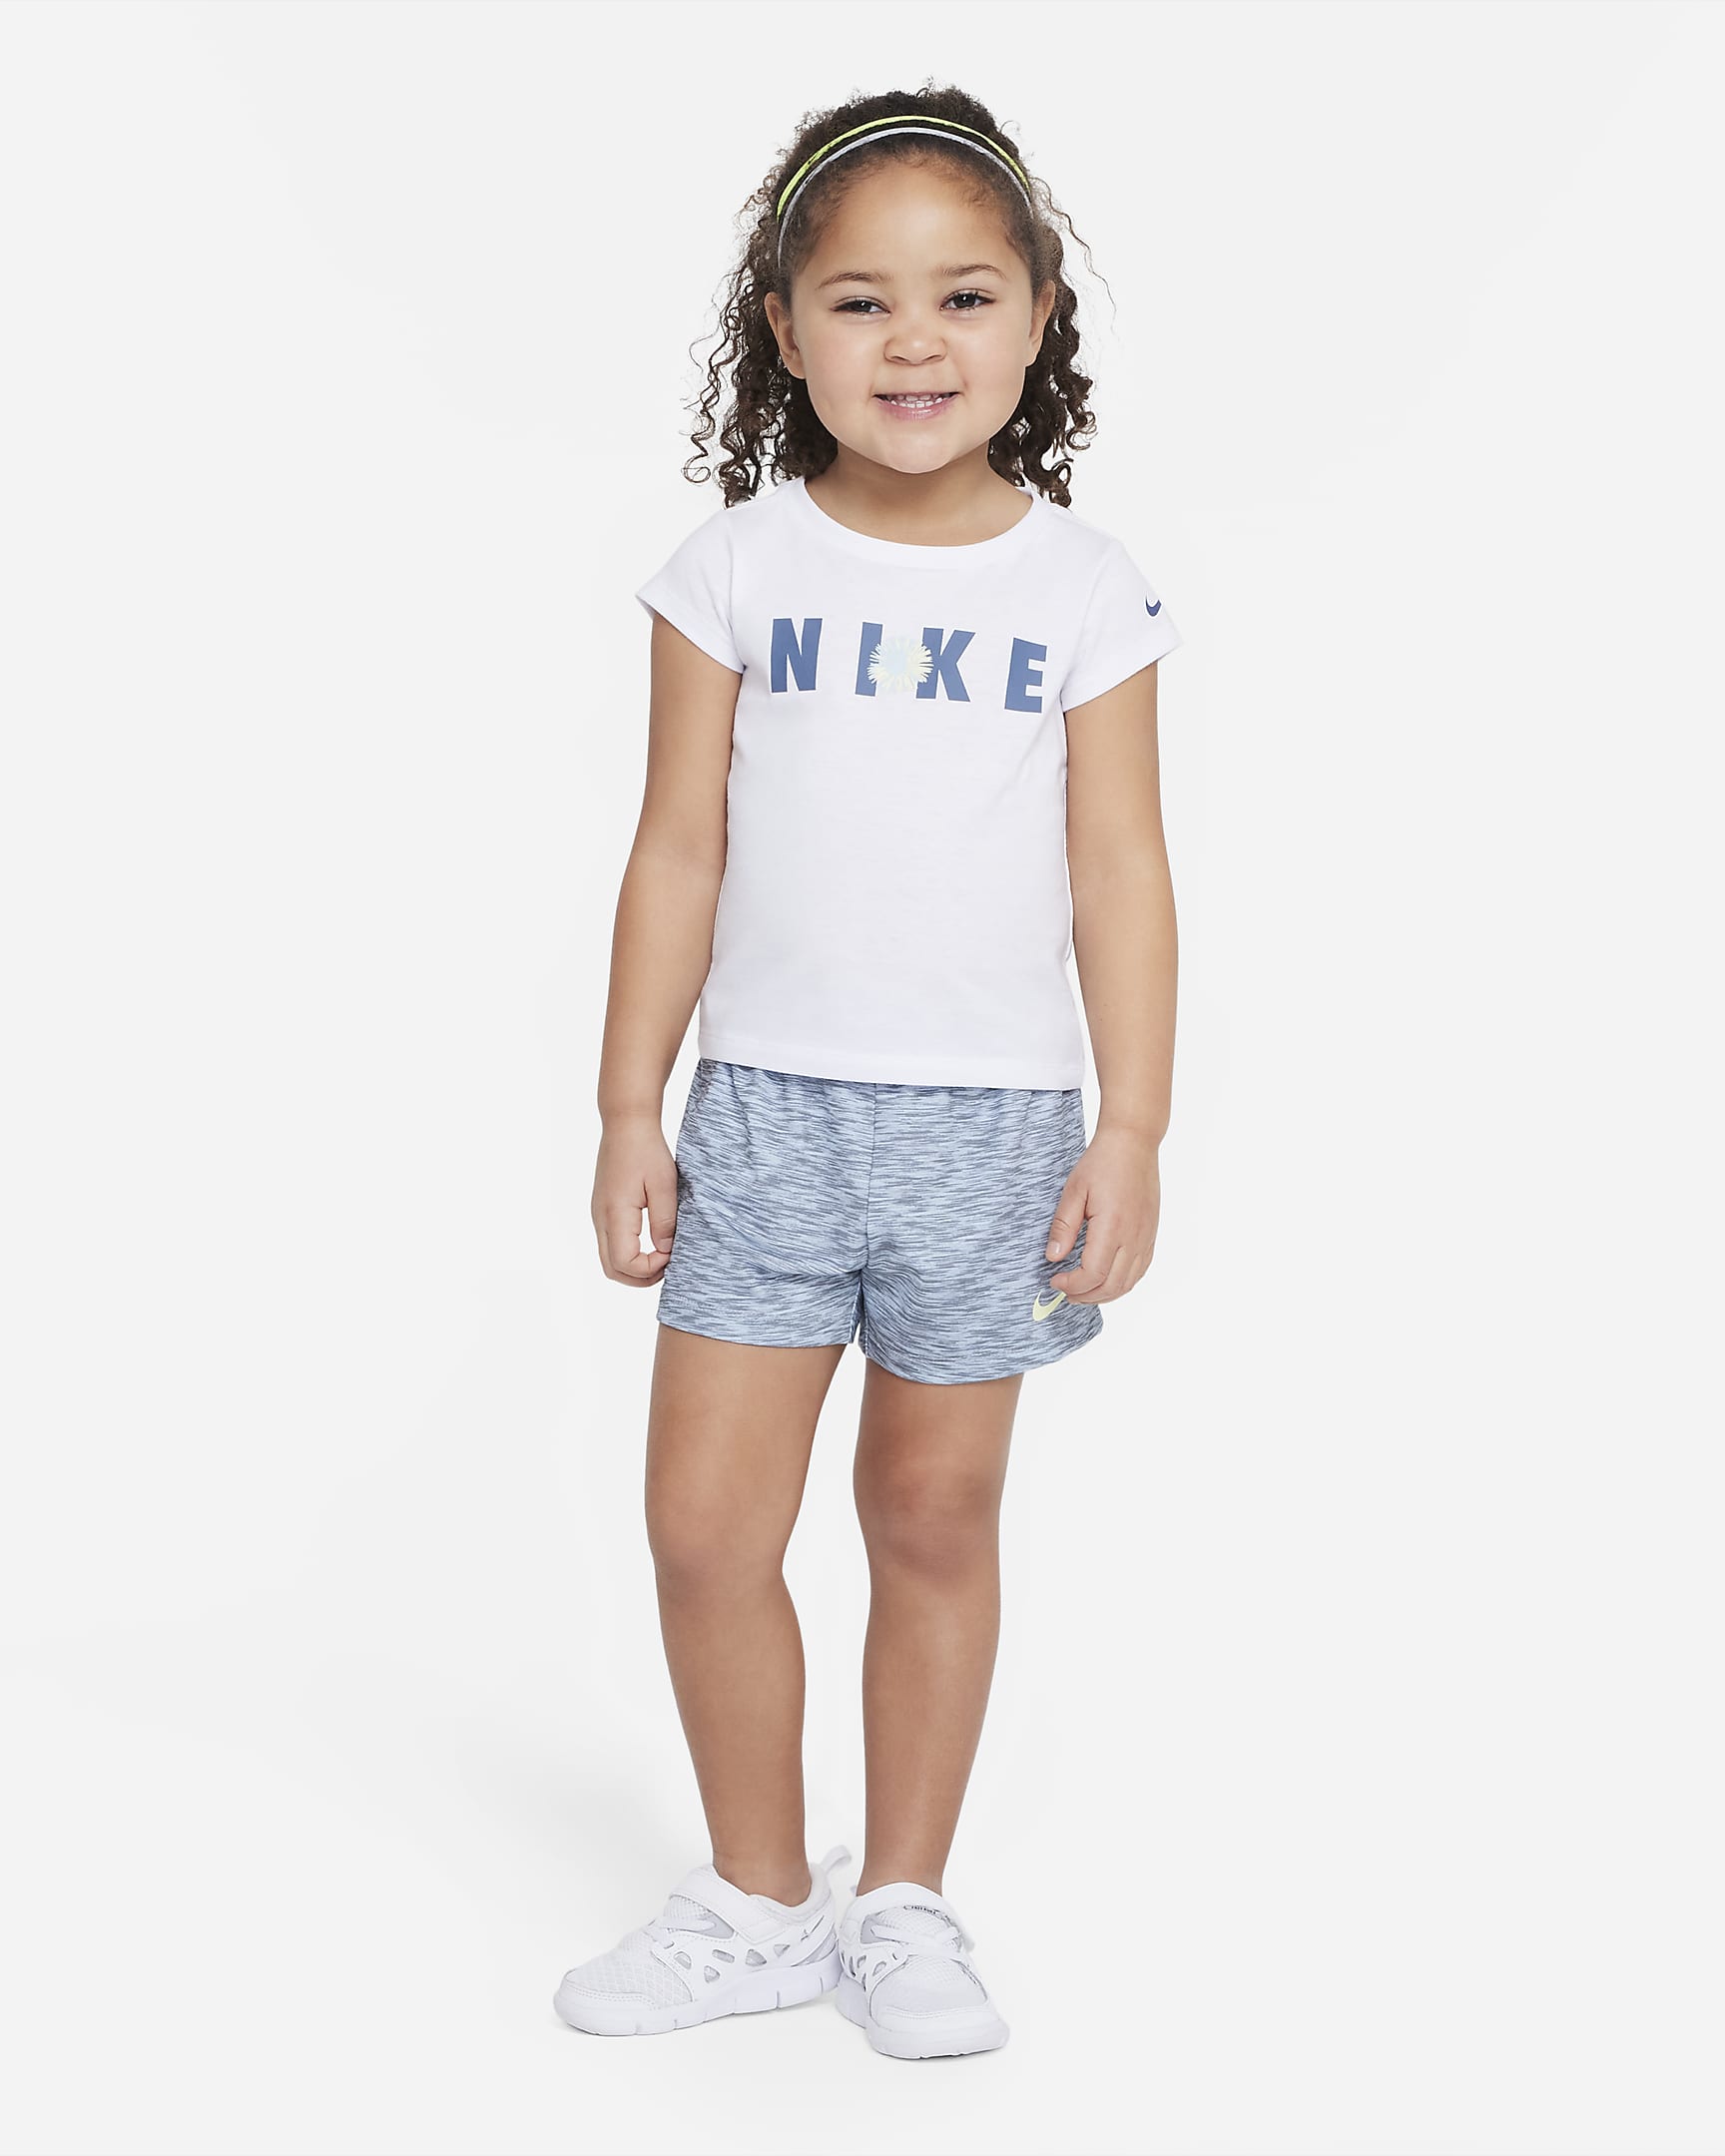 Conjunto infantil de playera y shorts Nike. Nike.com